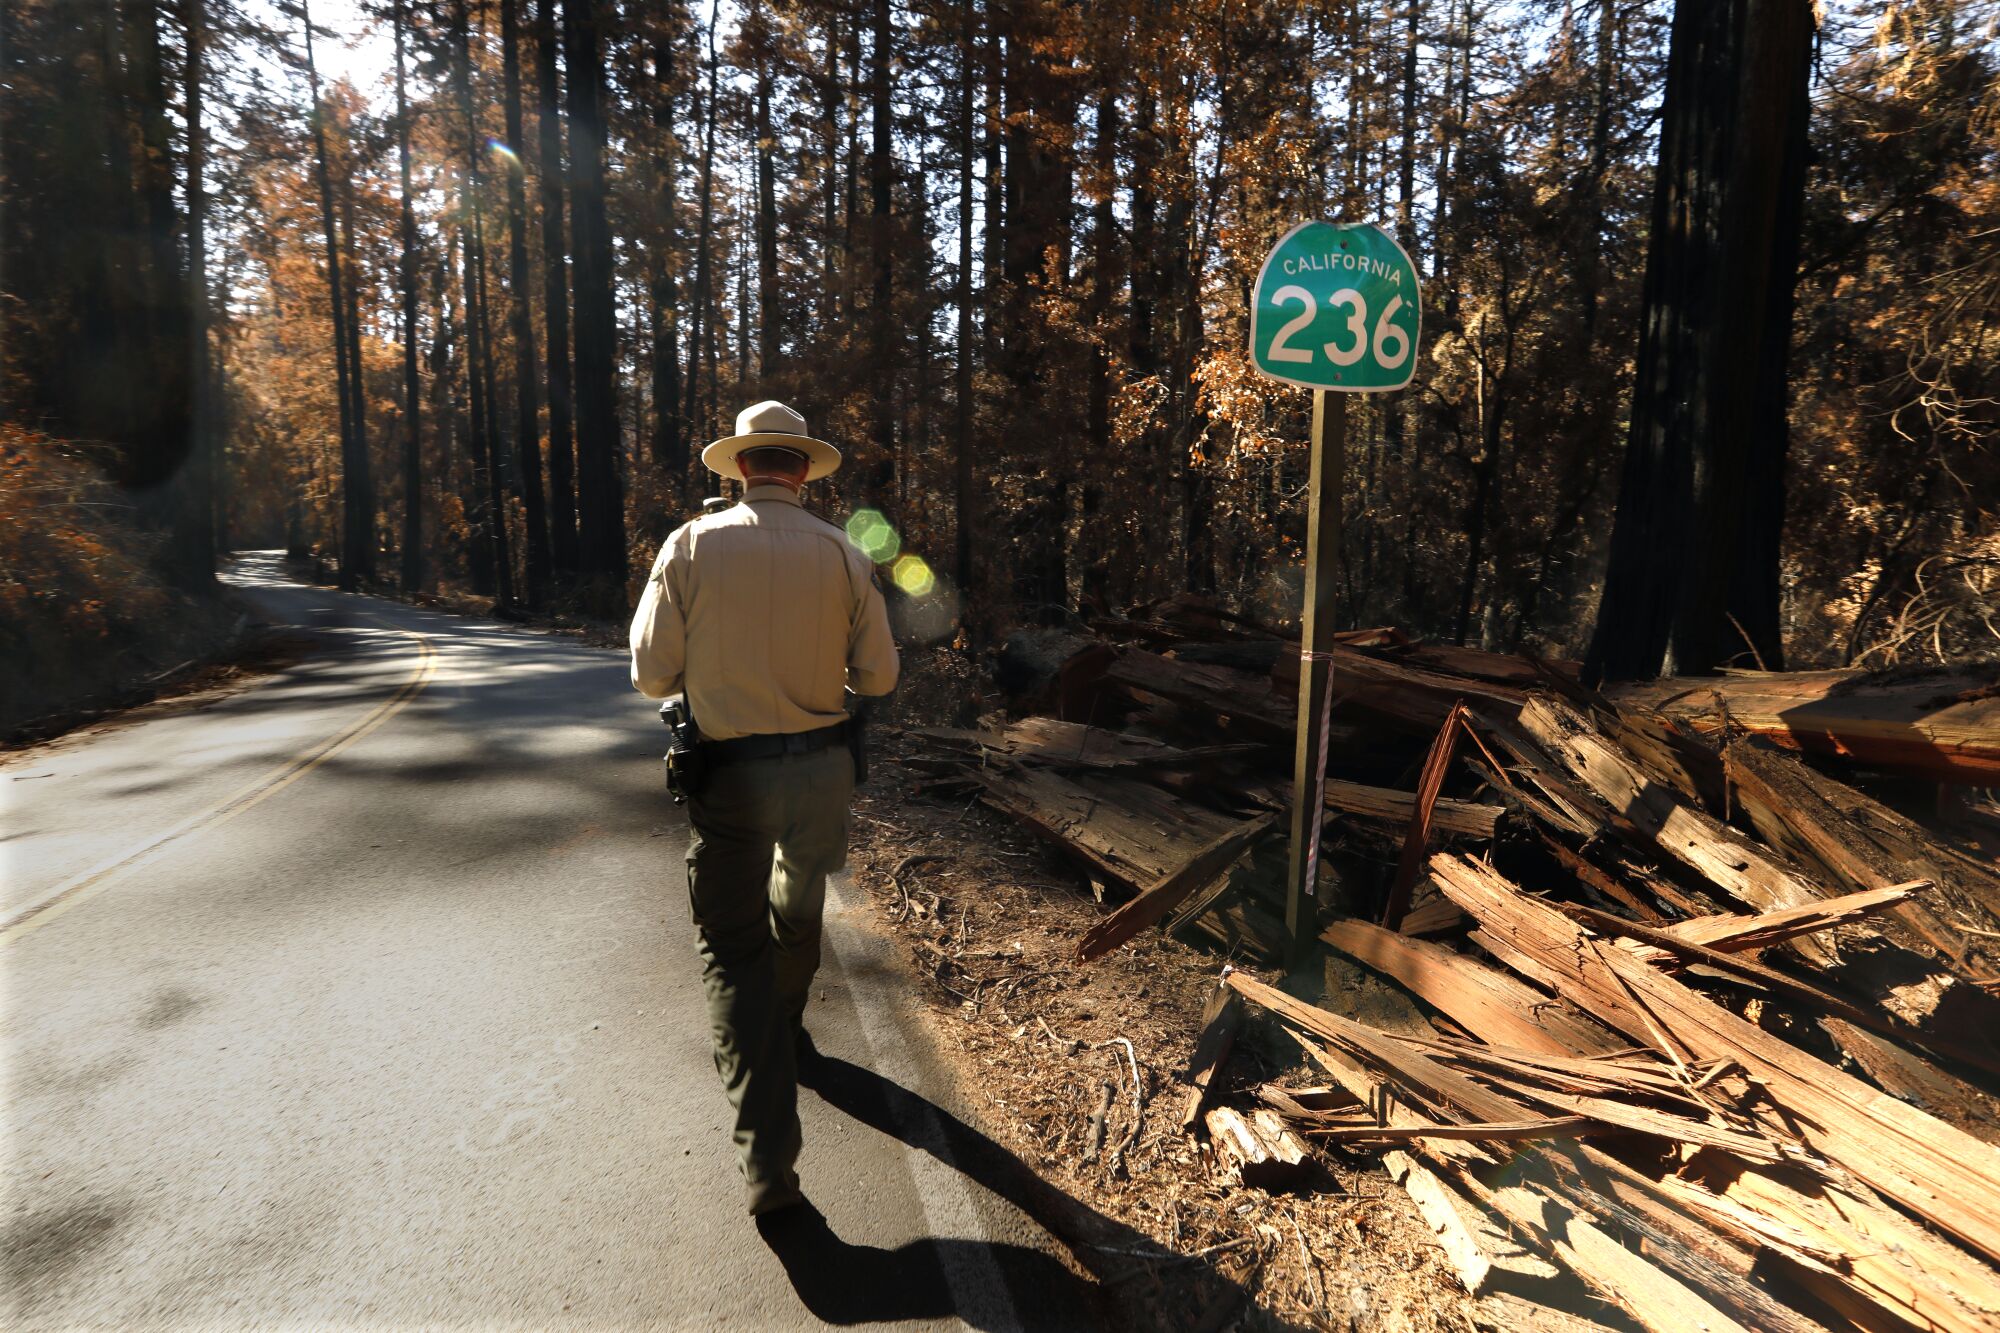 Gabe McKenna, a State Parks' safety officer and ranger, walks along Highway 236